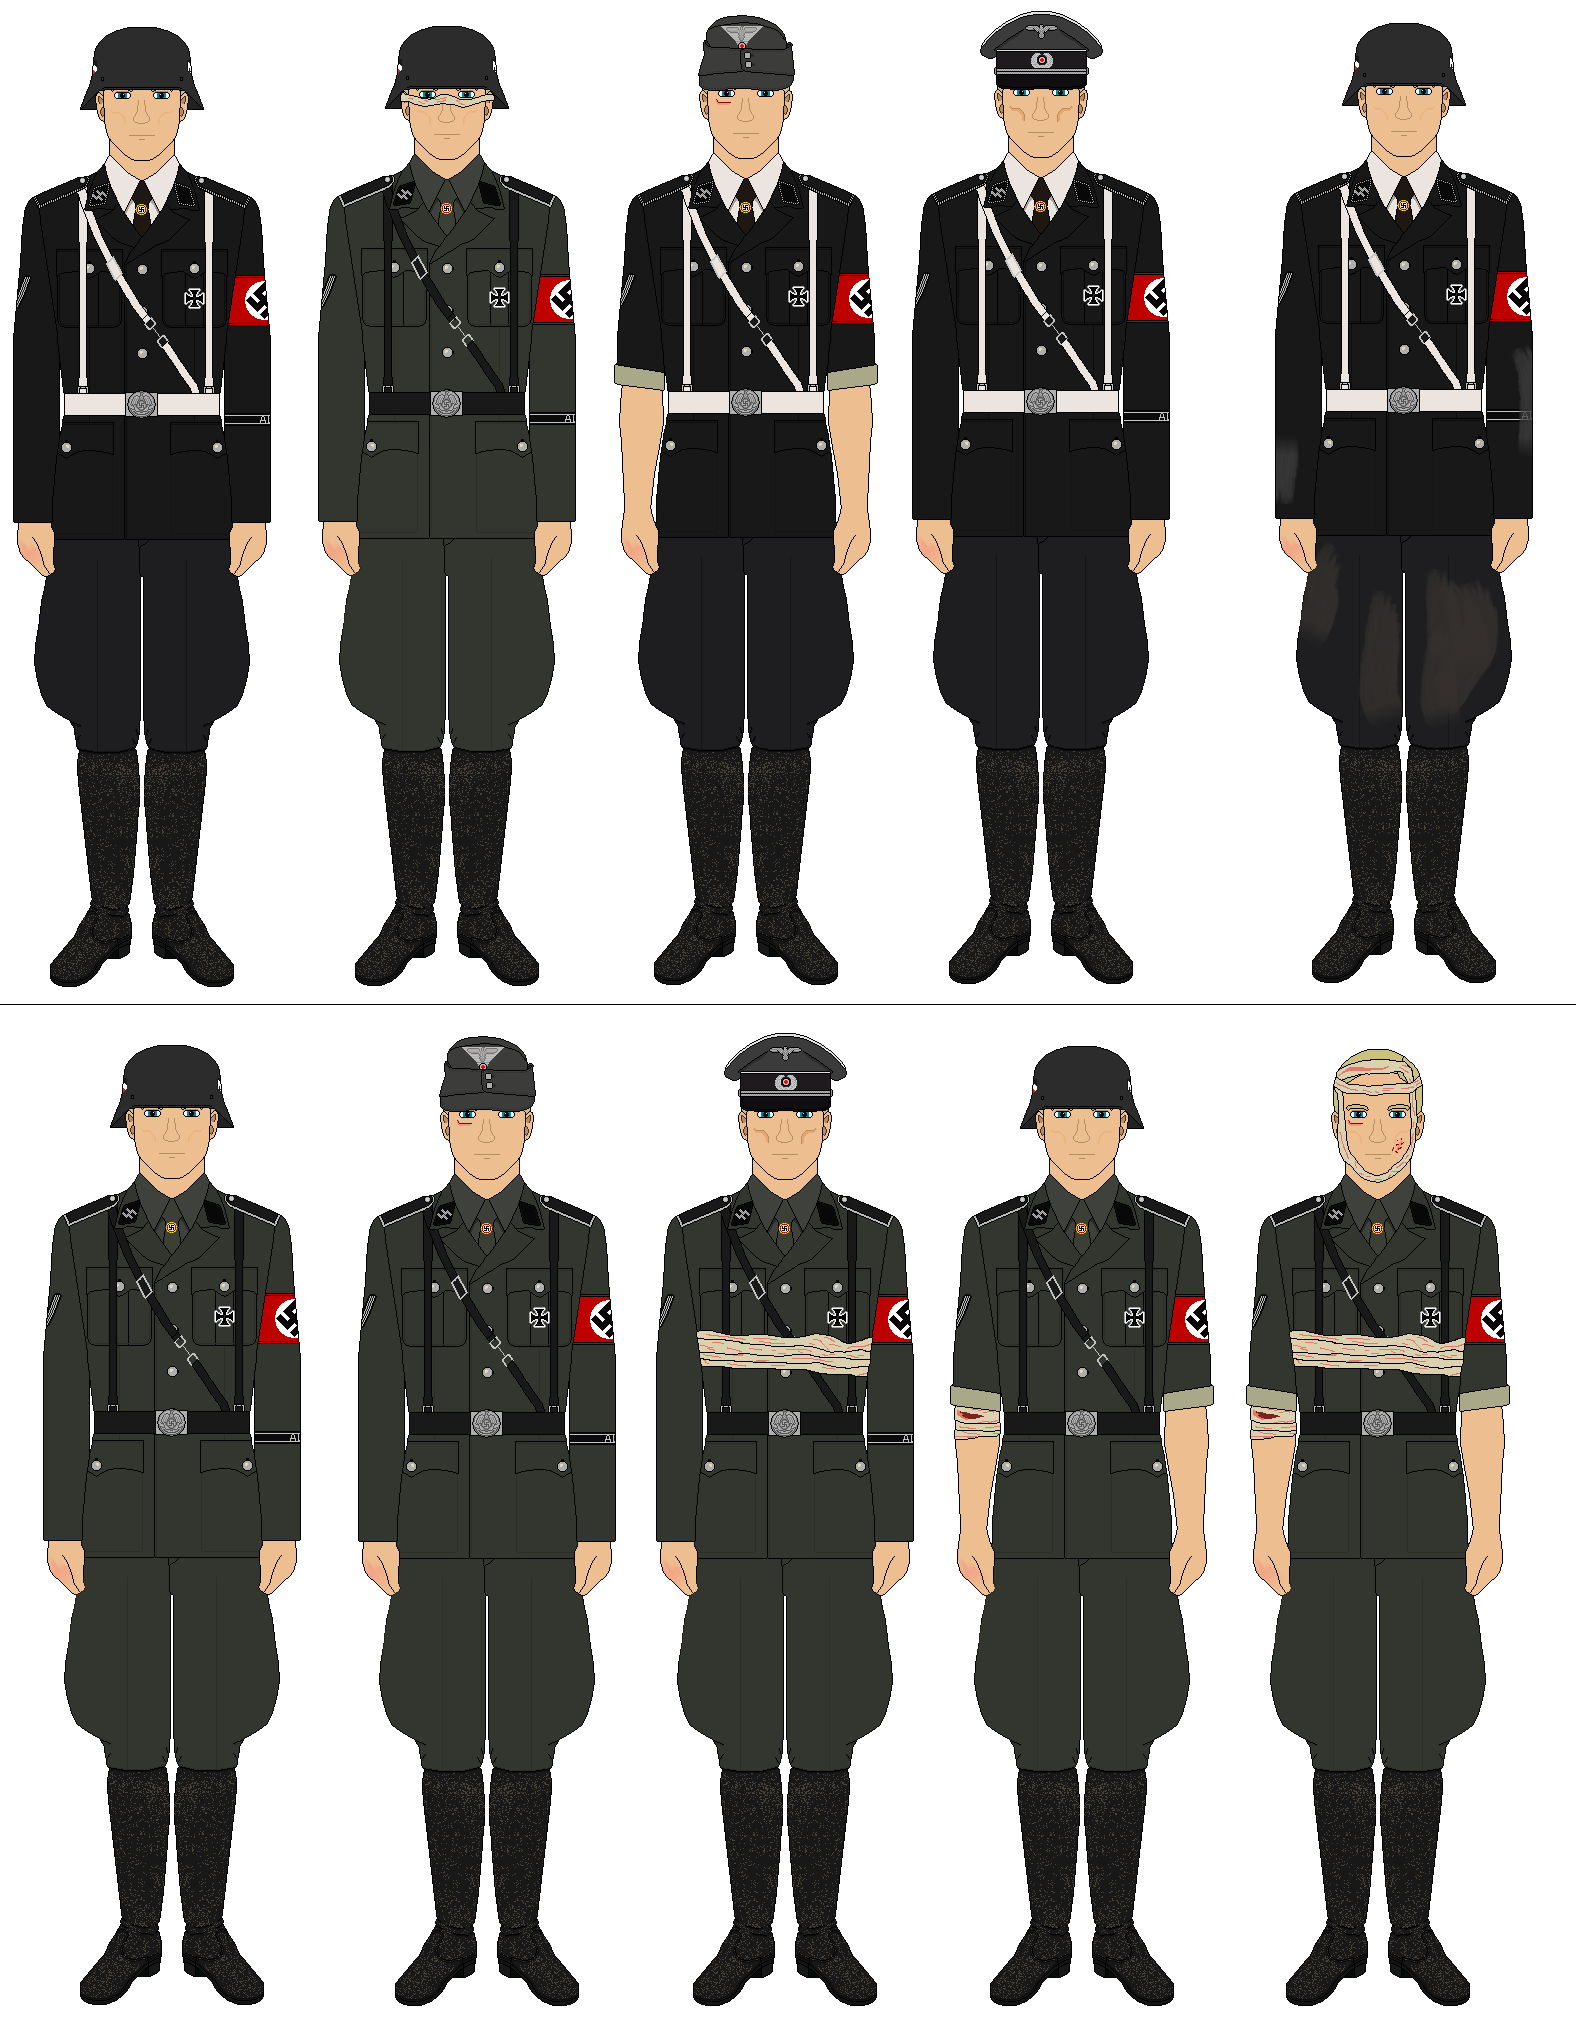 COD WaW SS Uniforms by Major-Vianna on DeviantArt